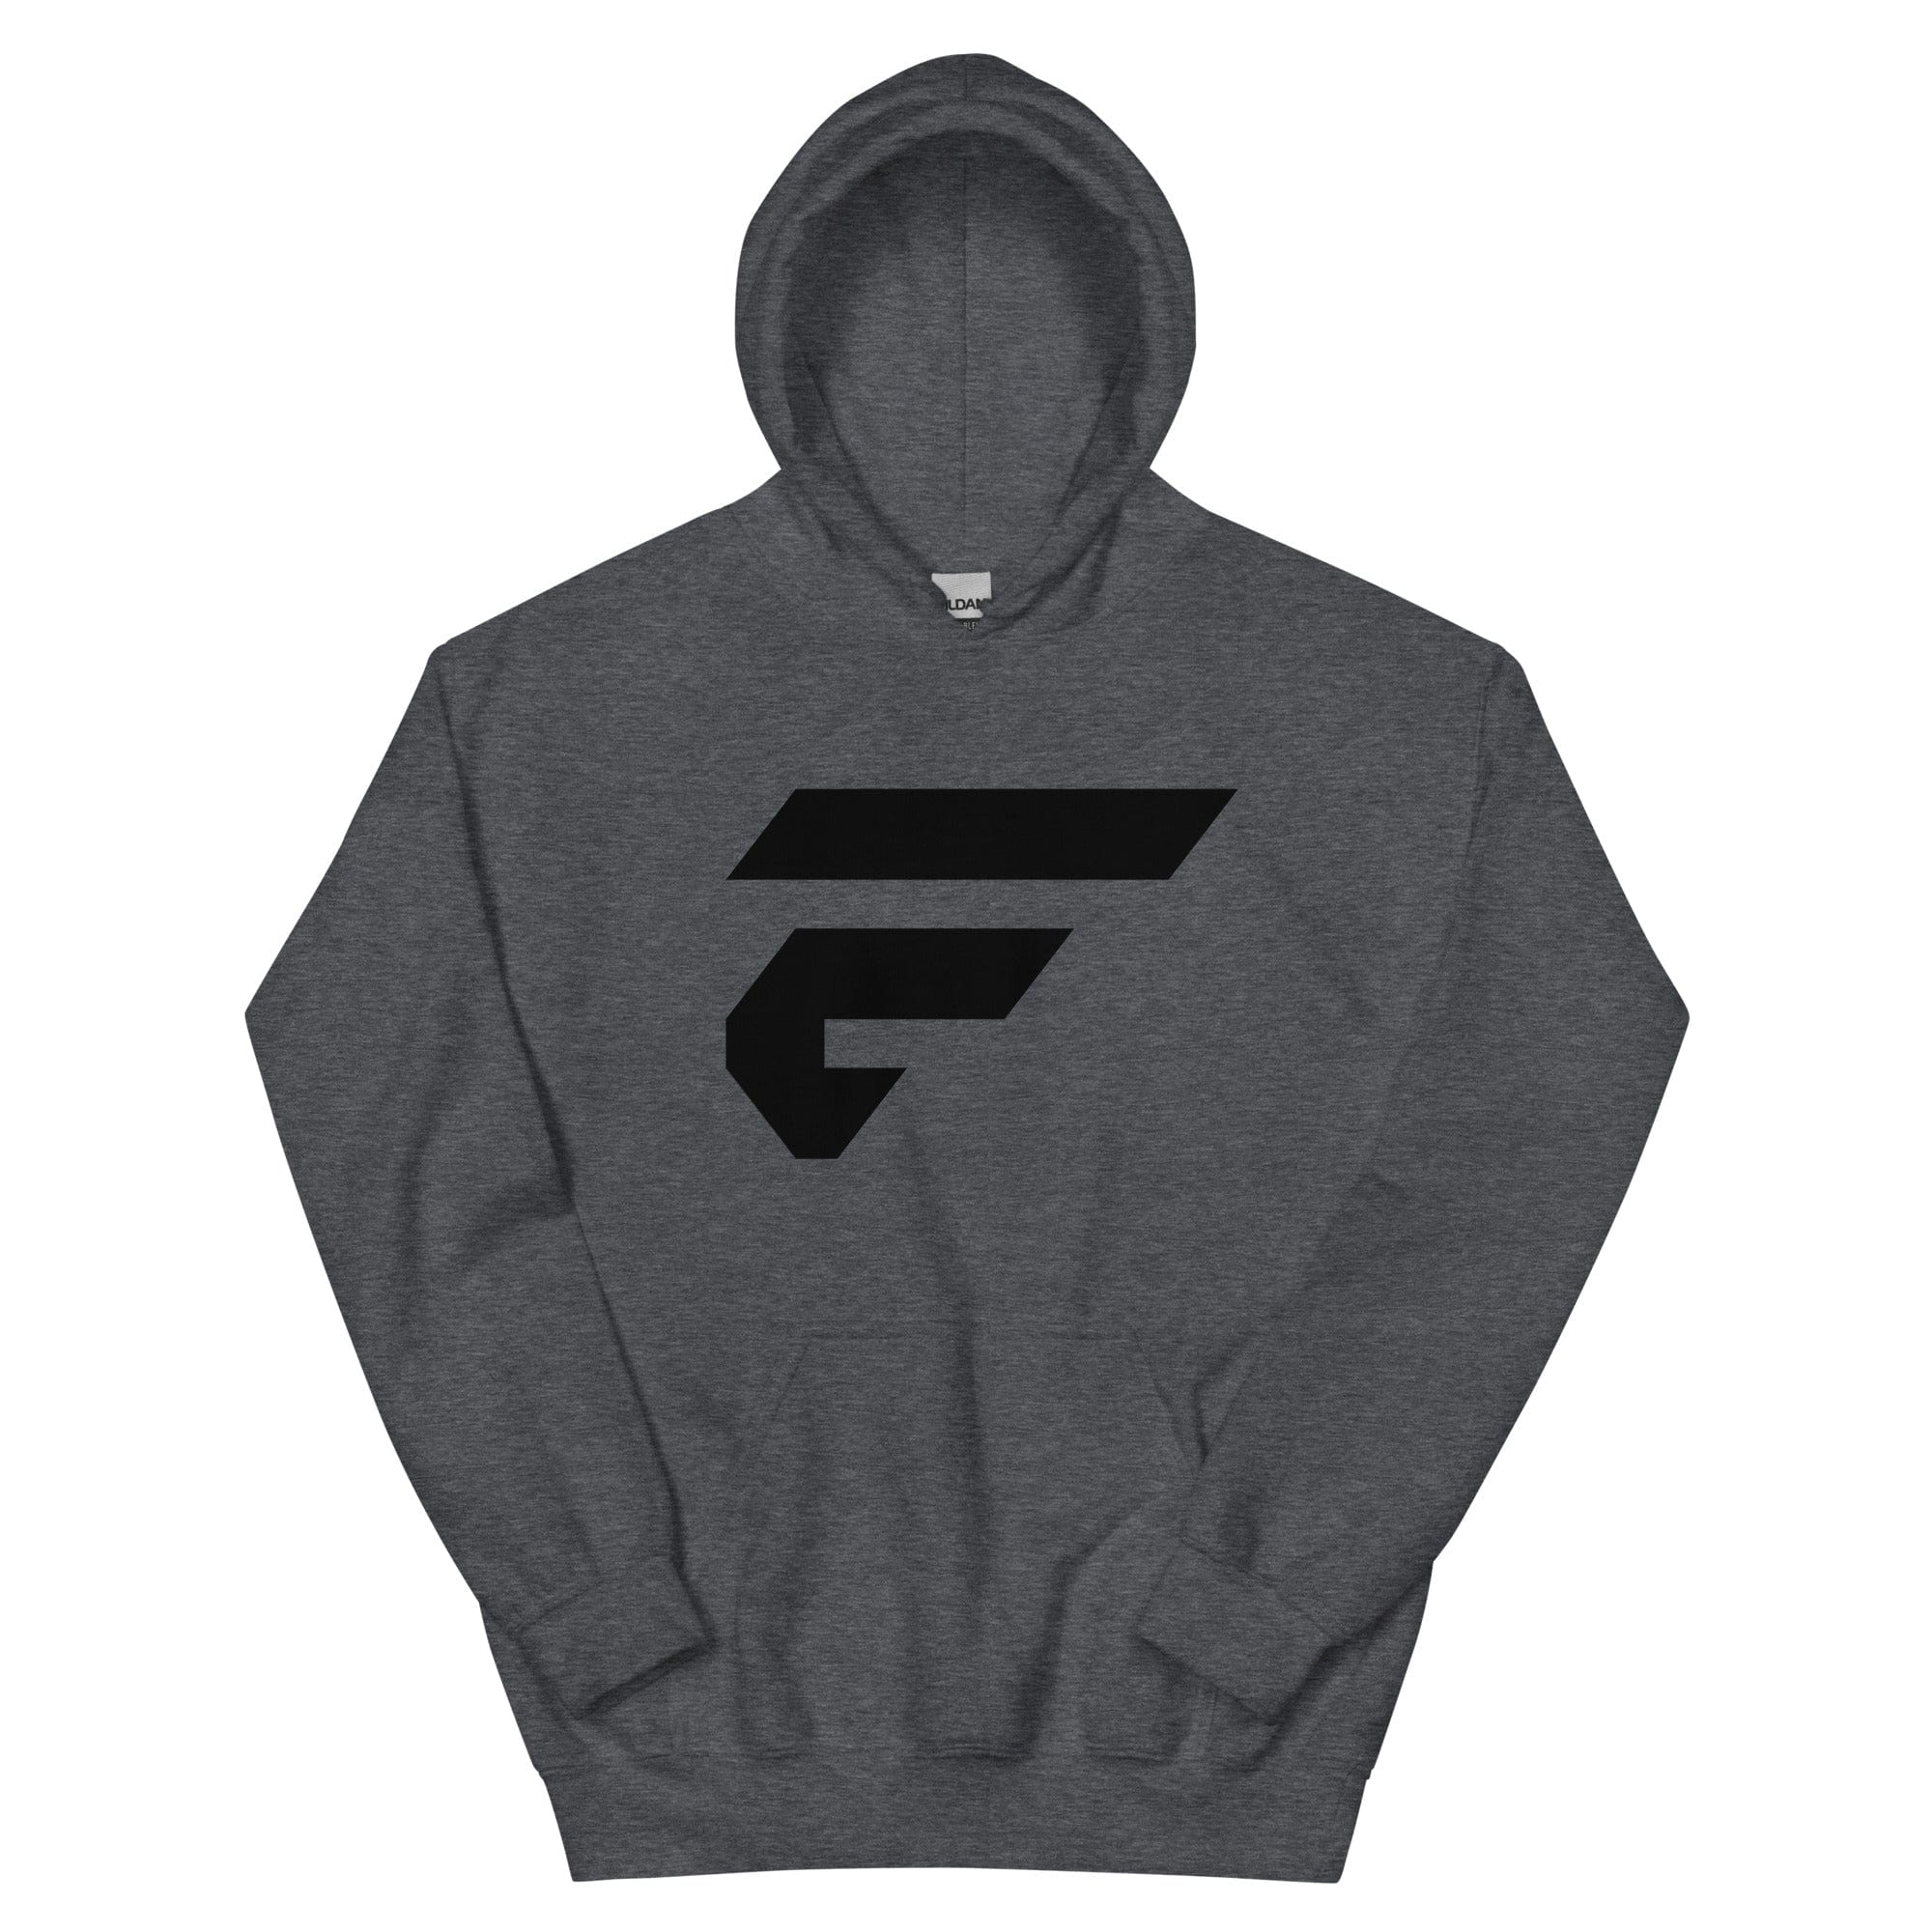 Dark grey unisex cotton hoodie with Fire Cornhole F logo in black